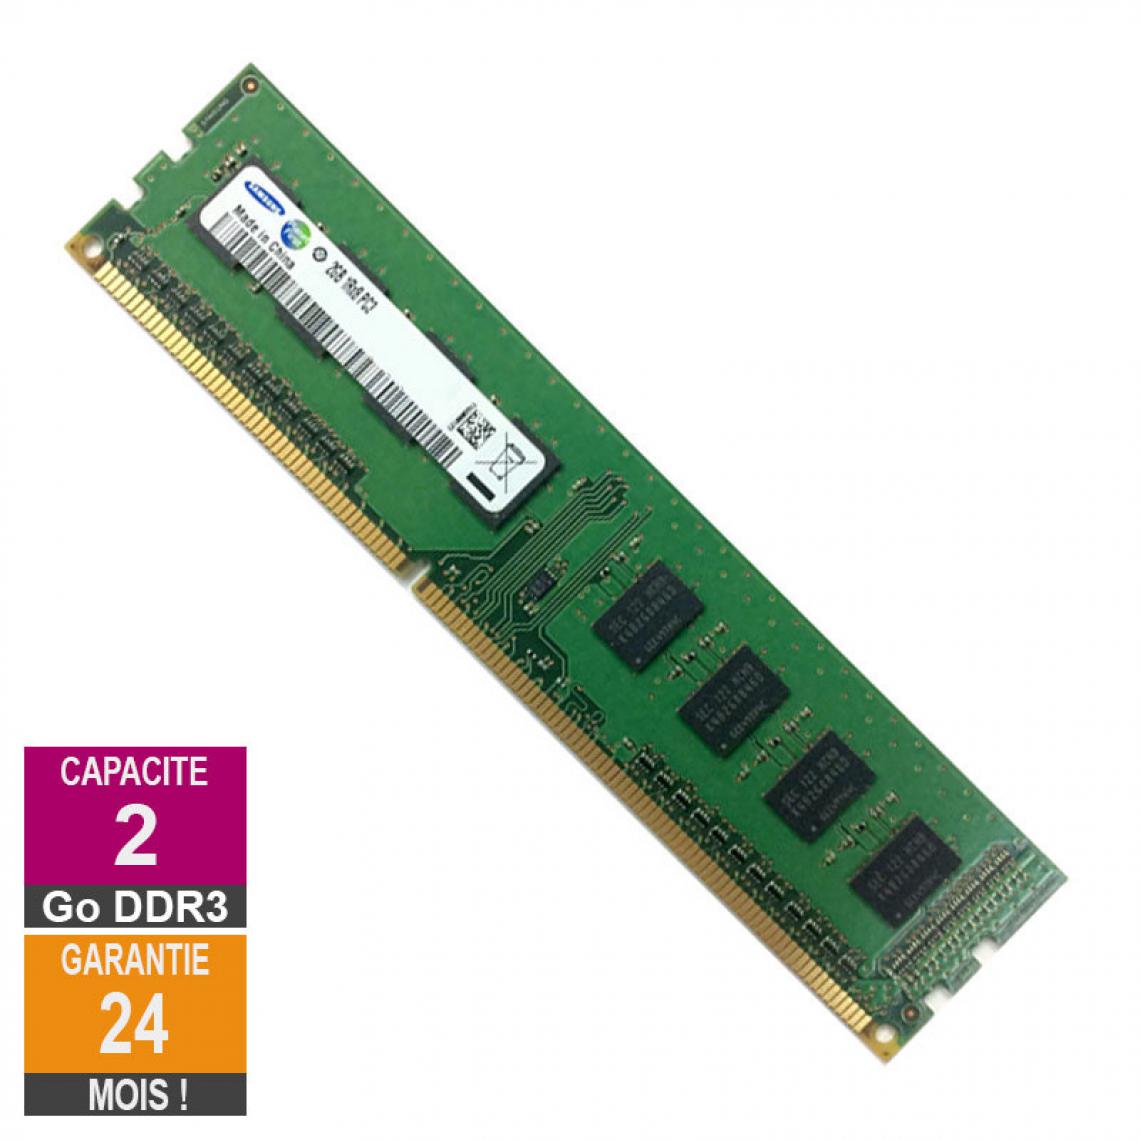 Samsung - Barrette Mémoire 2Go RAM DDR3 Samsung M378B5773DH0-CK0 PC3-12800U 1600MHz 1Rx8 - RAM PC Fixe